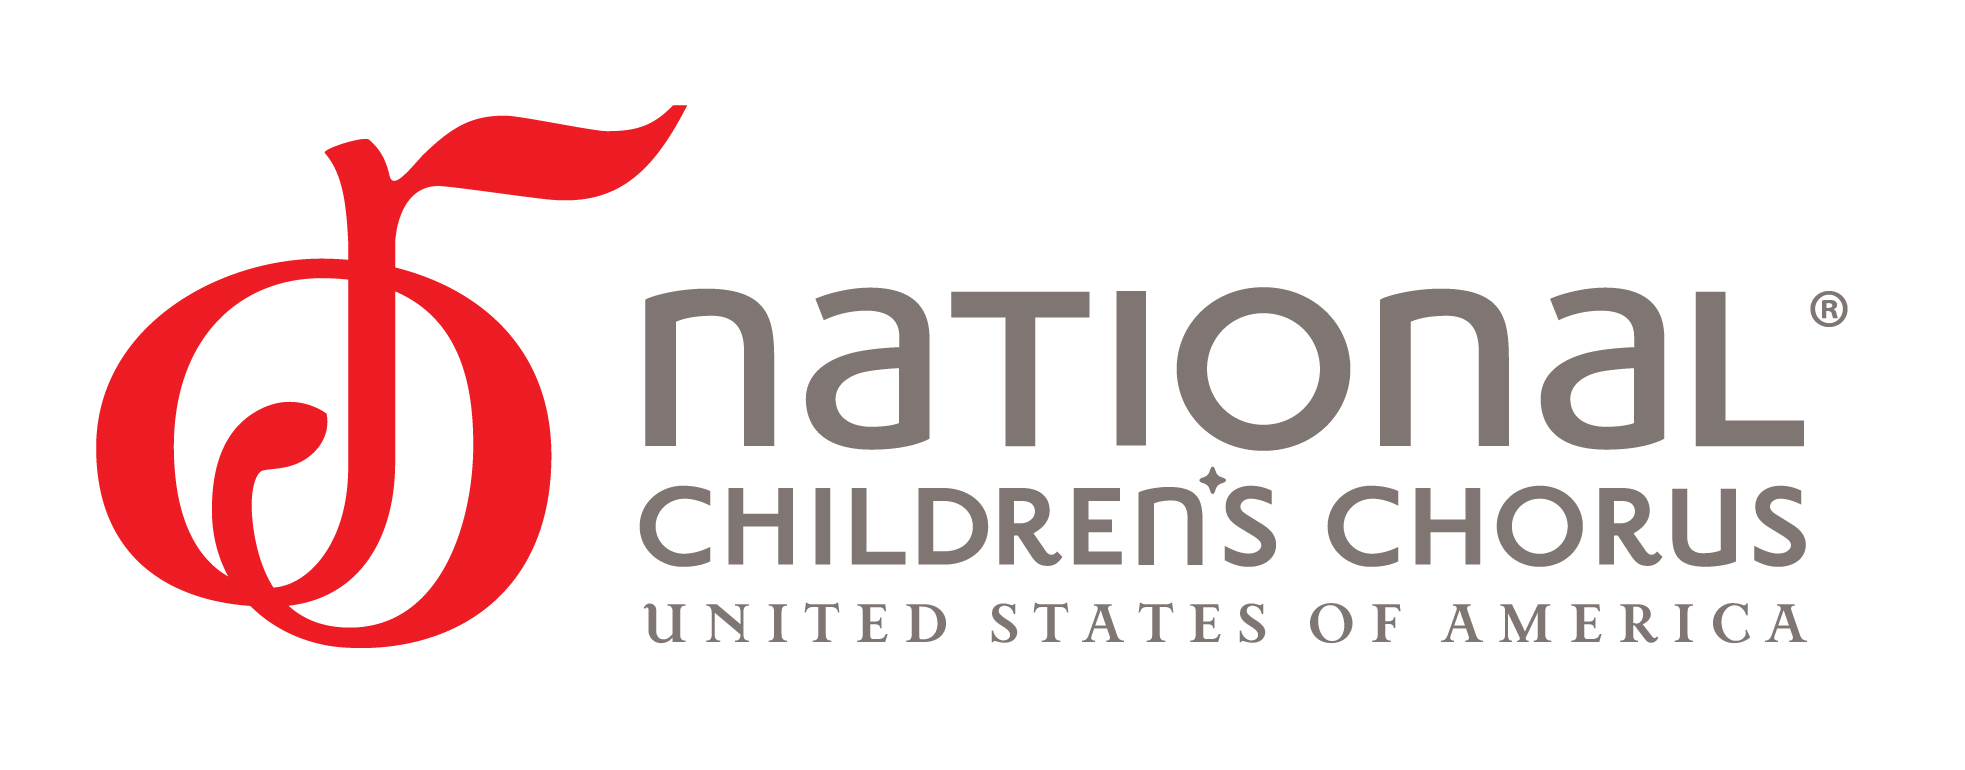 National Children's Chorus logo